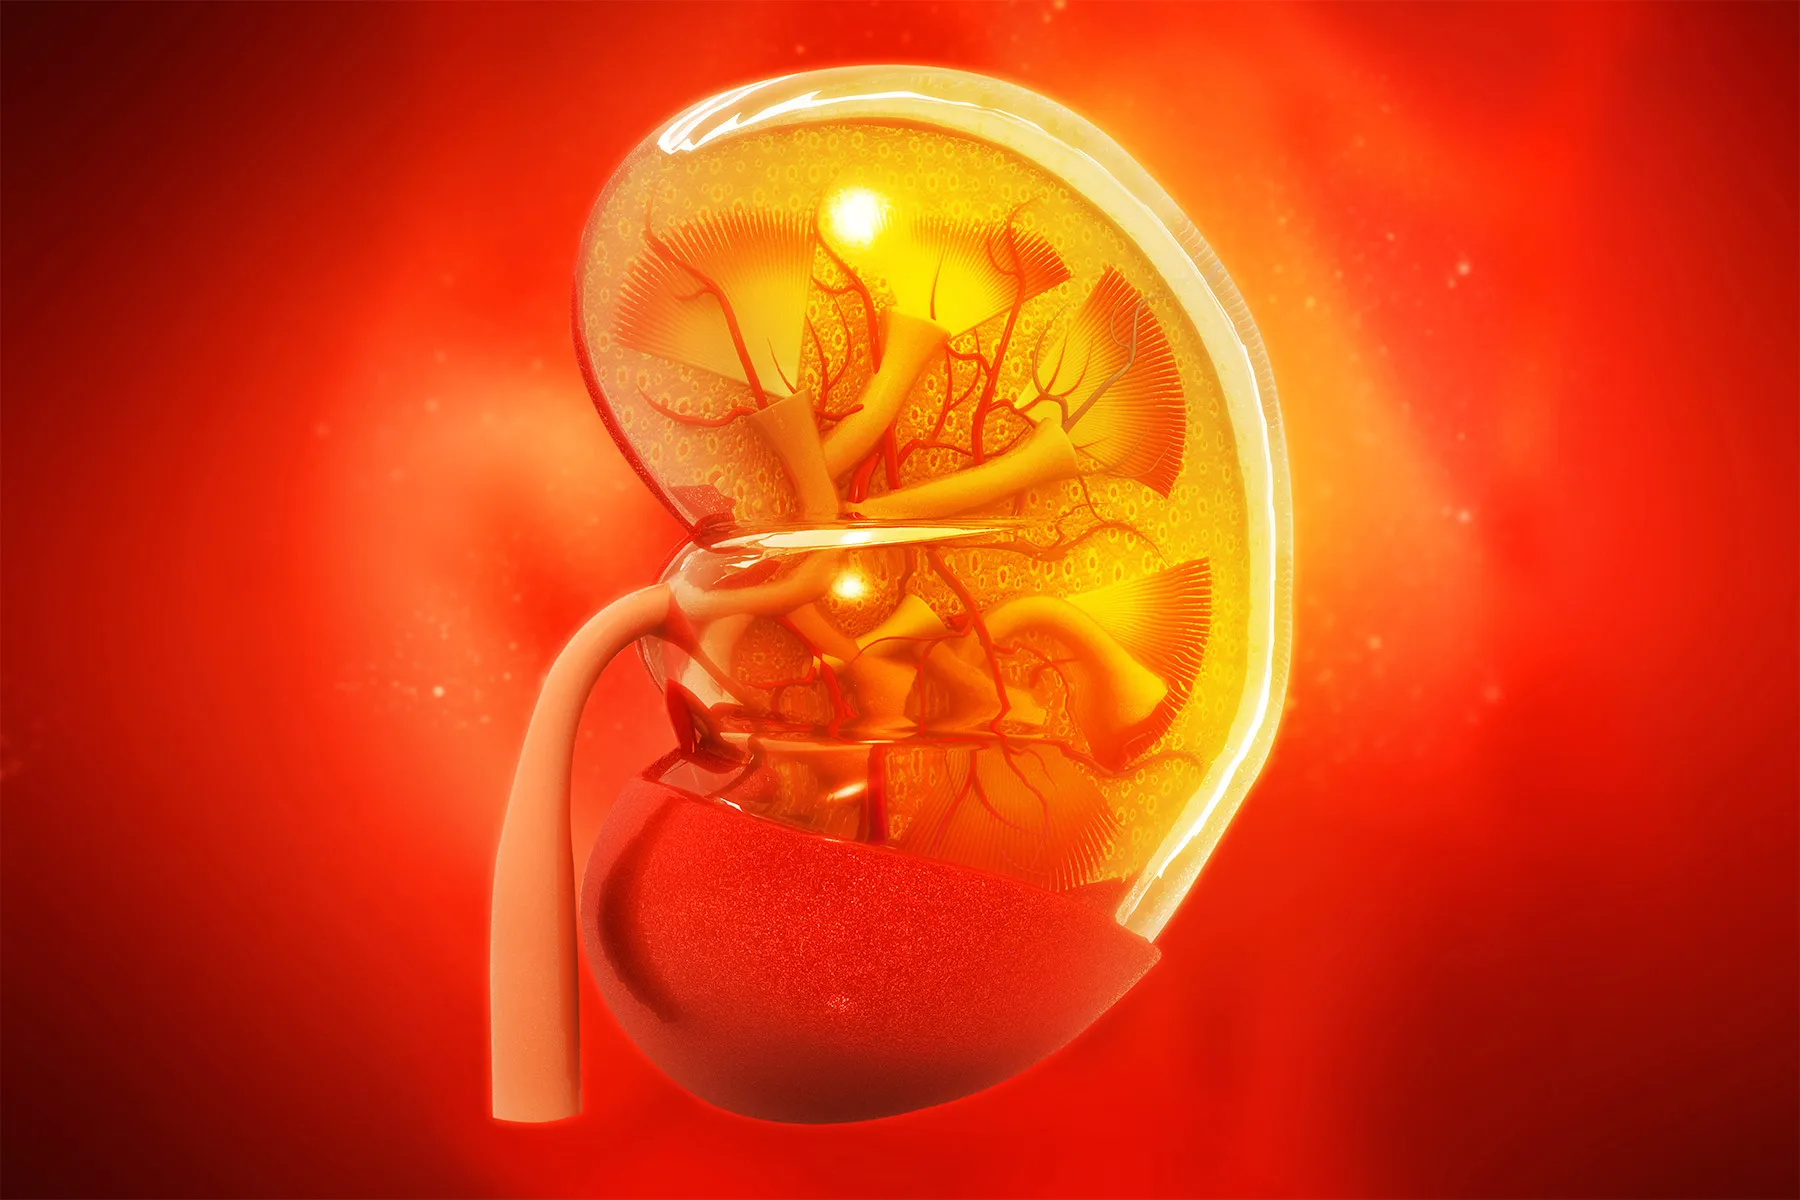 Innovative Kidney Donor 'Voucher' System Is Saving Lives